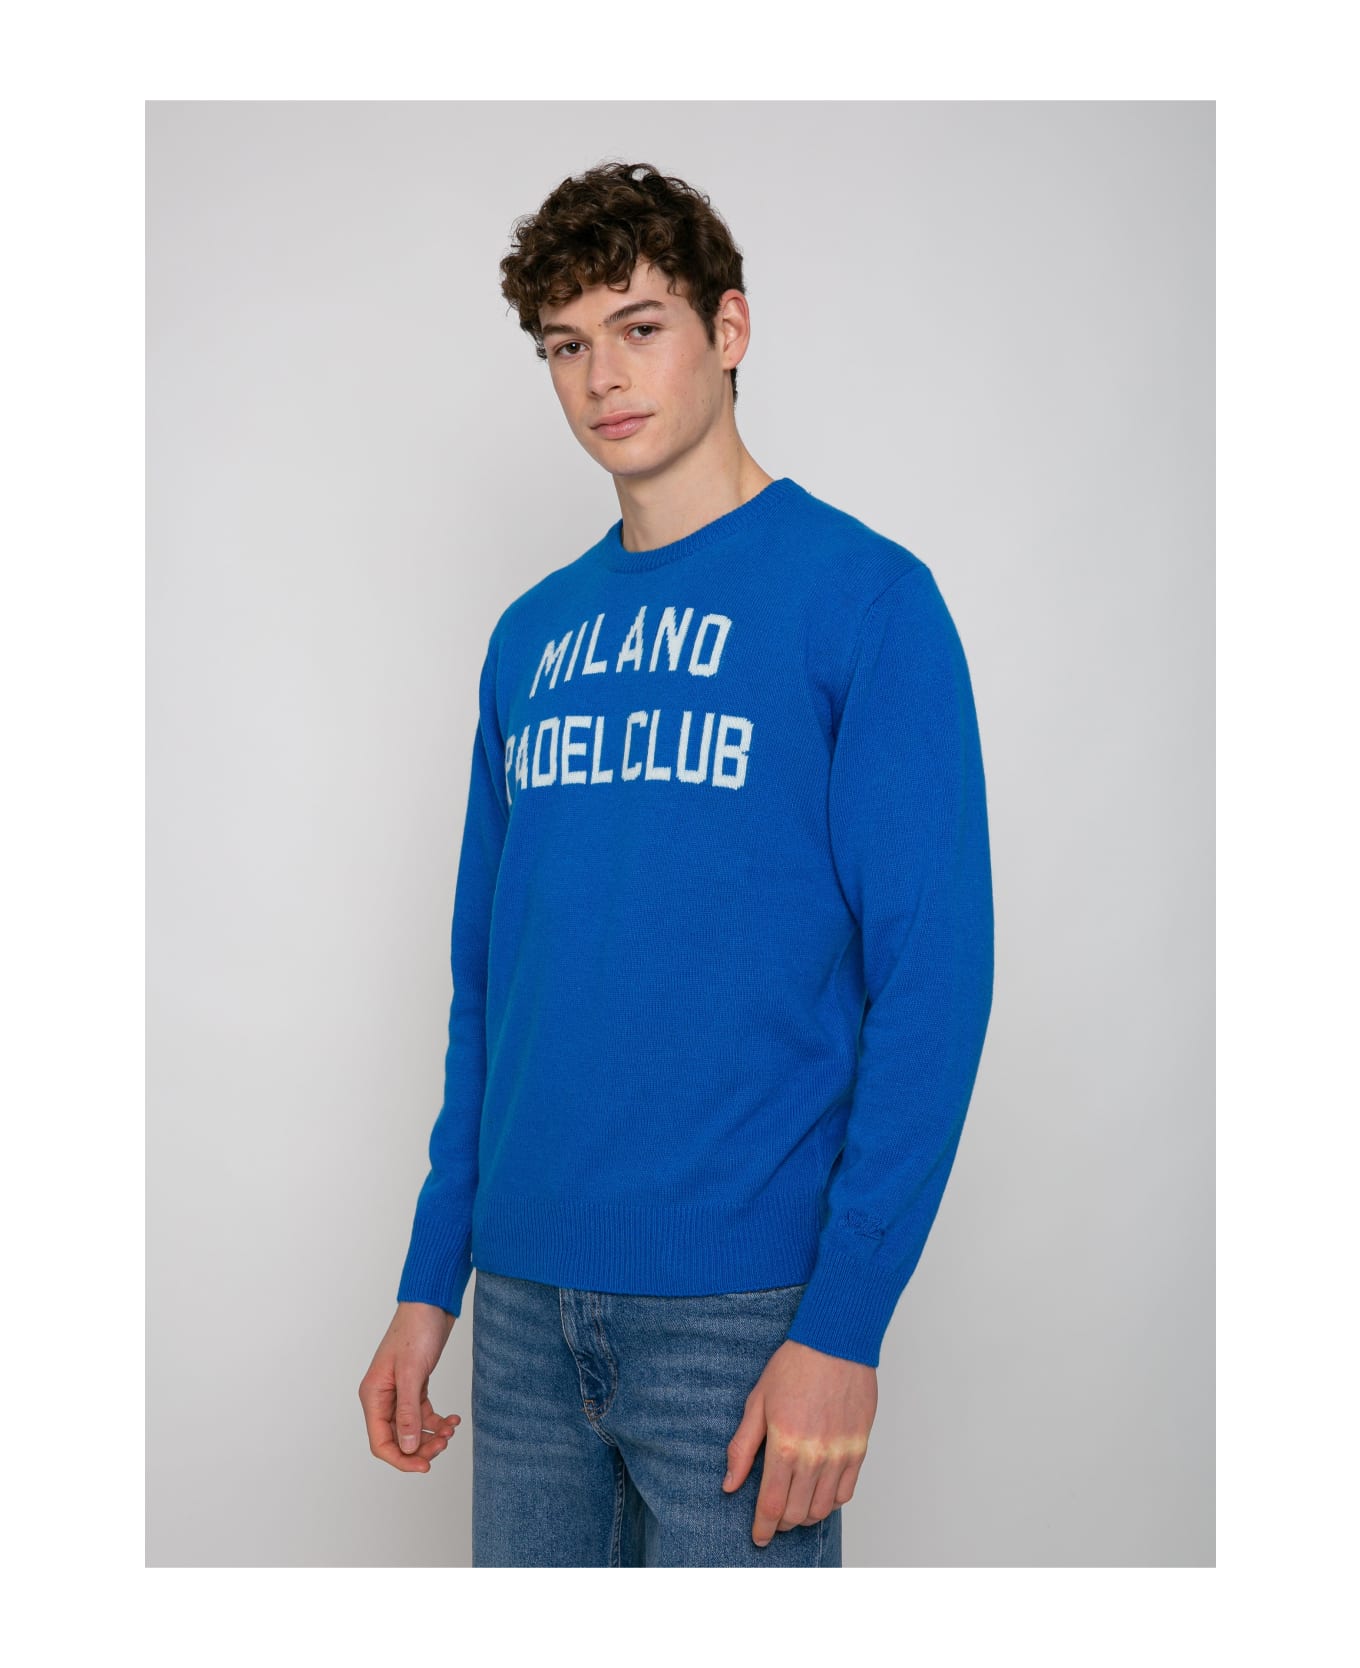 MC2 Saint Barth Man Sweater With Milano Padel Club Jacquard Print - BLUE ニットウェア